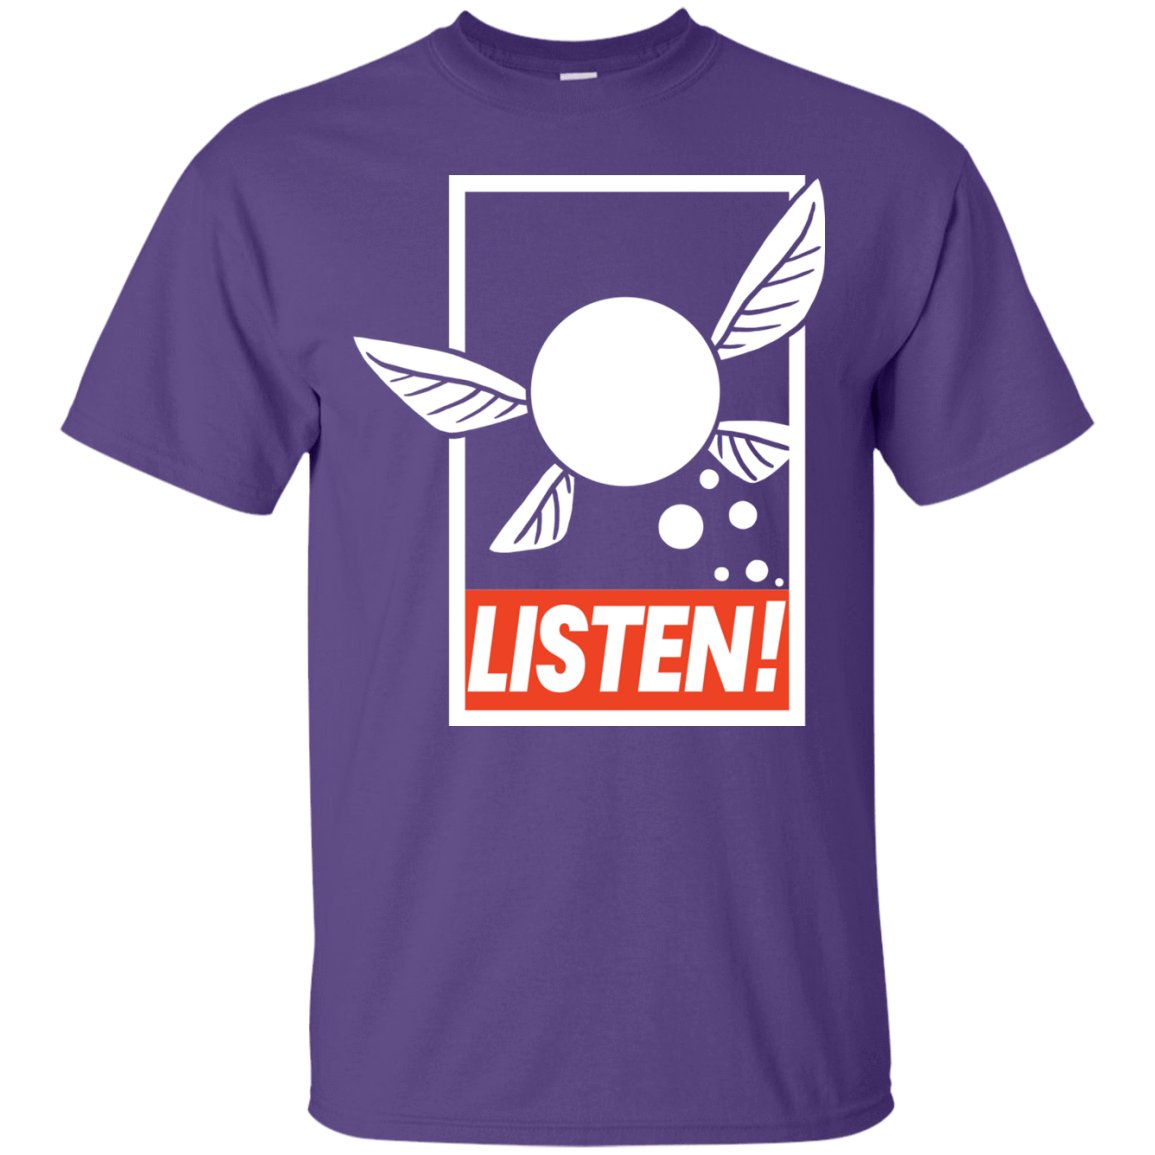 T-Shirts Purple / S LISTEN! T-Shirt